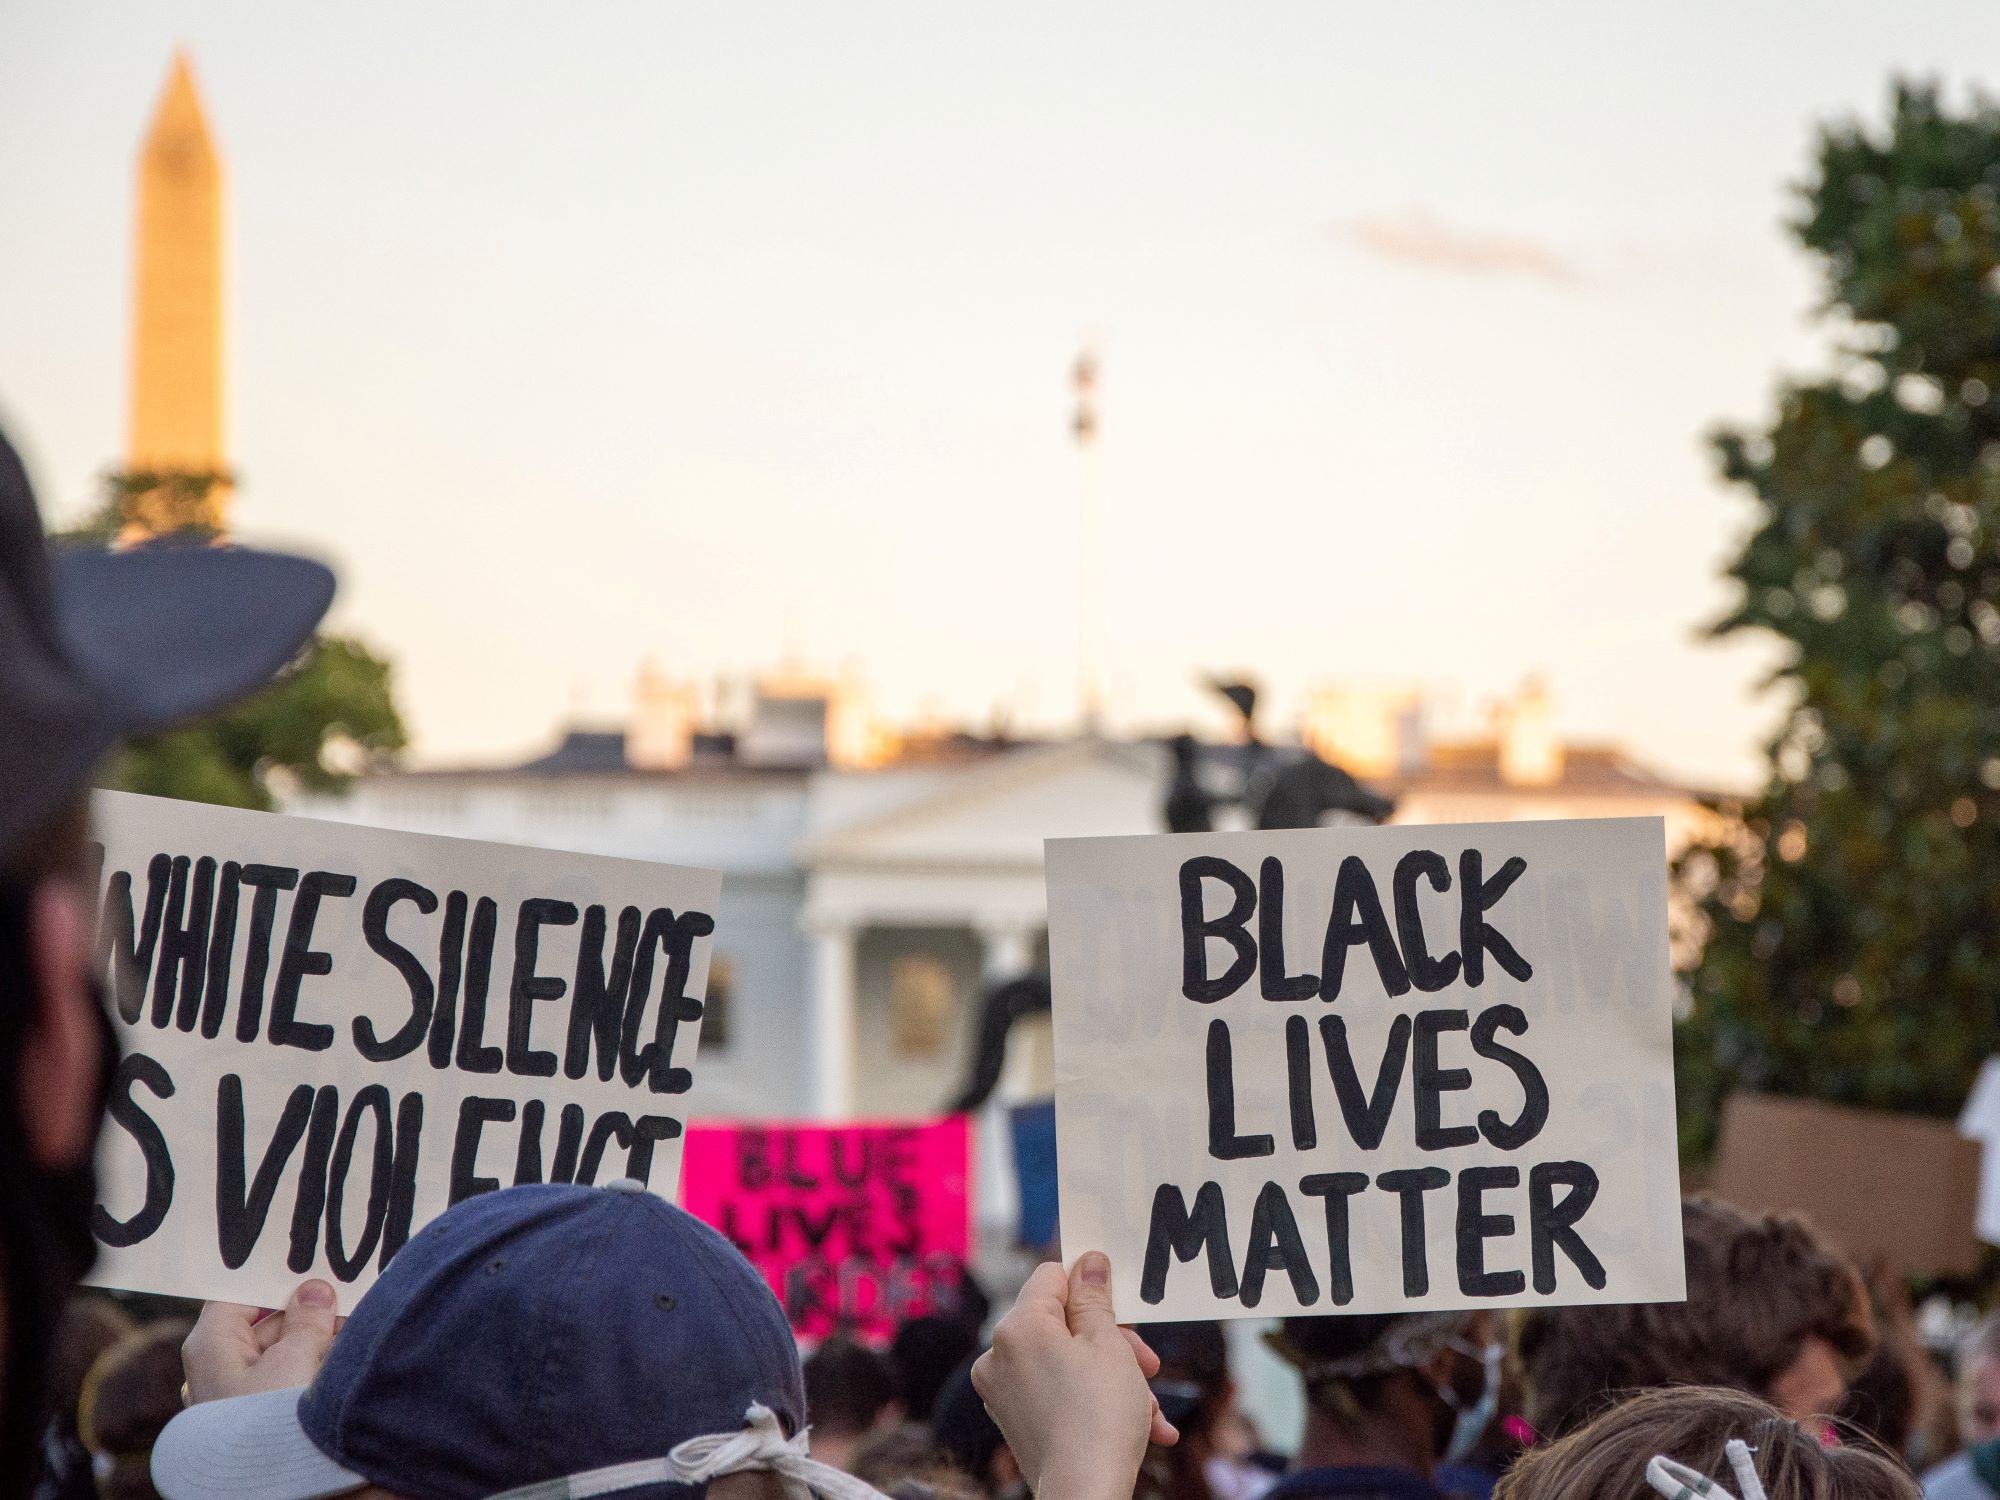 Black Lives Matter protest in DC - Photo by Koshu Kunii on Unsplash